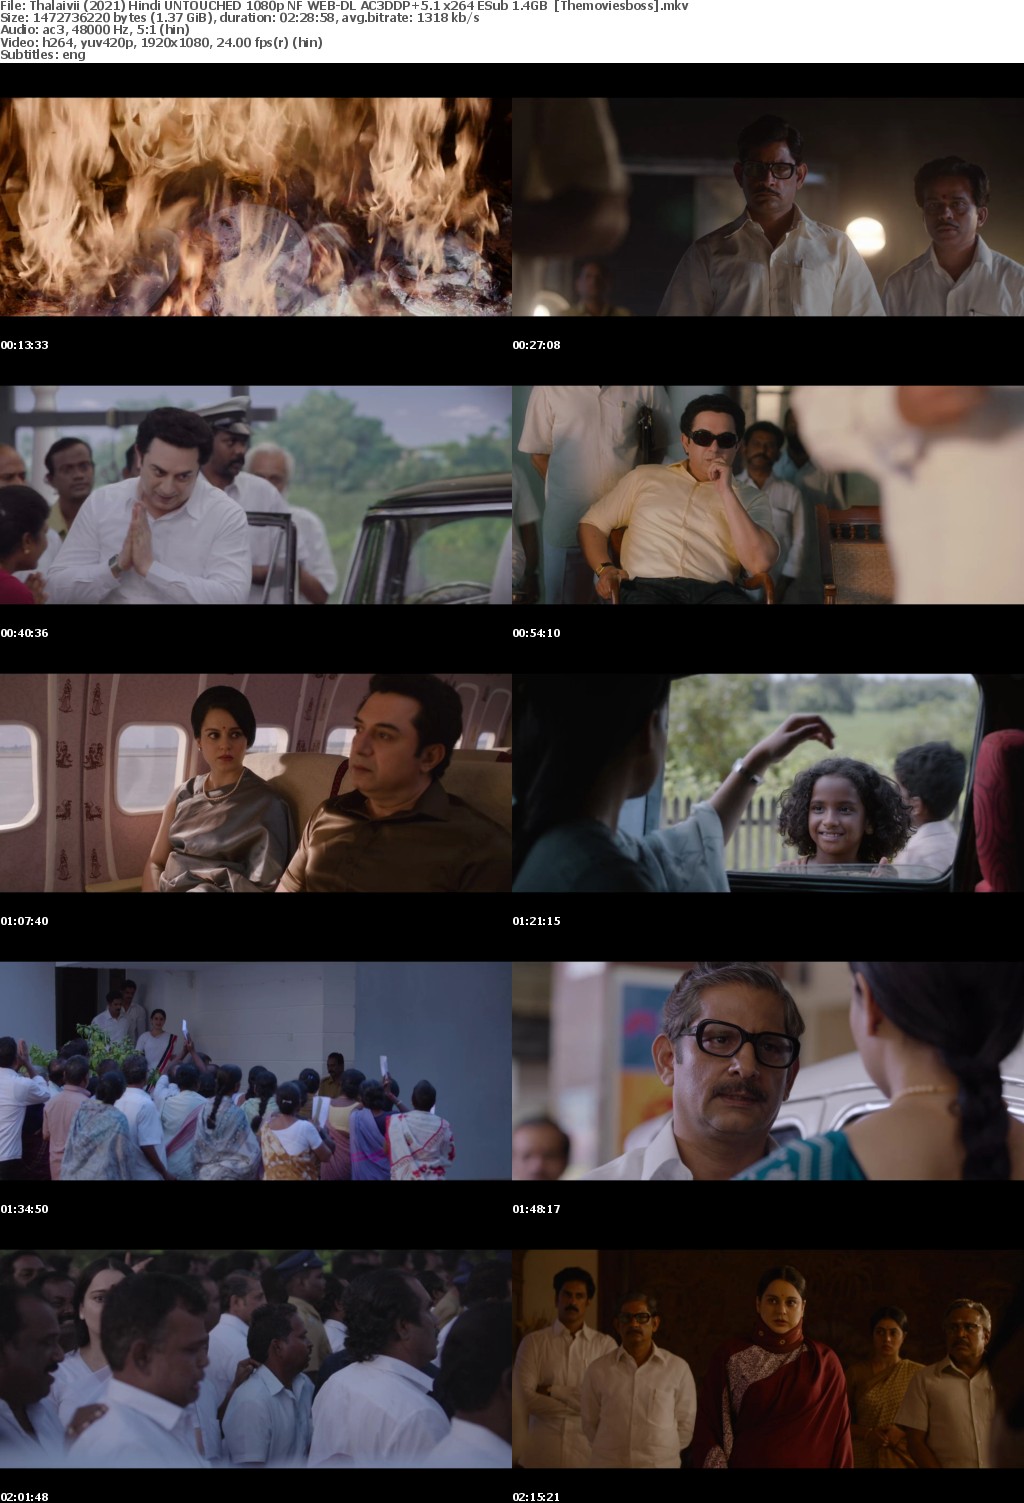 Thalaivii (2021) Hindi UNTOUCHED 1080p NF WEB-DL AC3DDP+5 1 x264 ESub 1 4GB Themoviesboss